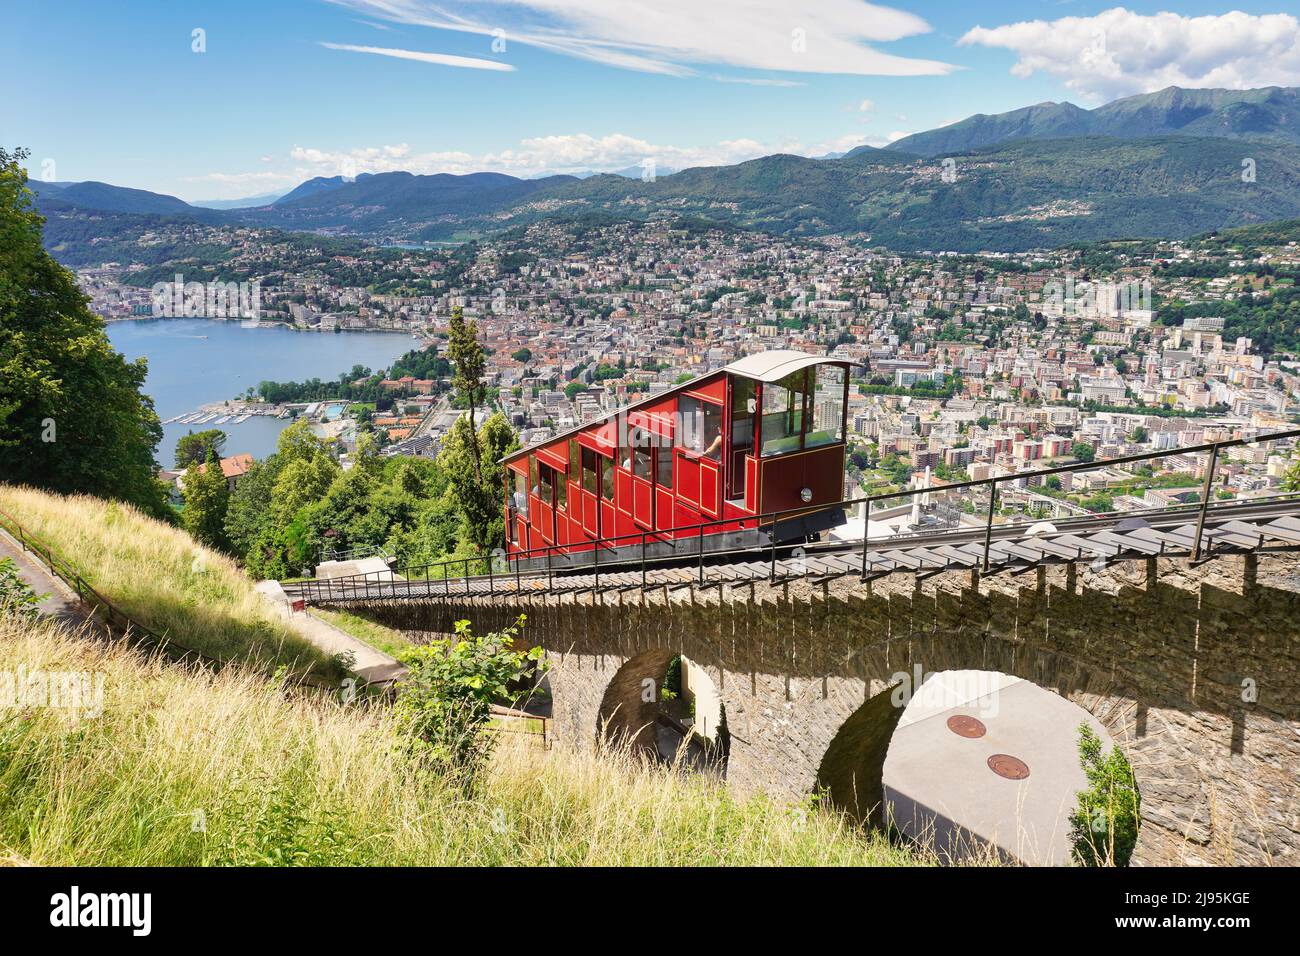 Lugano, canton of Ticino, Switzerland. Monte Brè funicular. Public transport cable car with scenic view over the city. Stock Photo